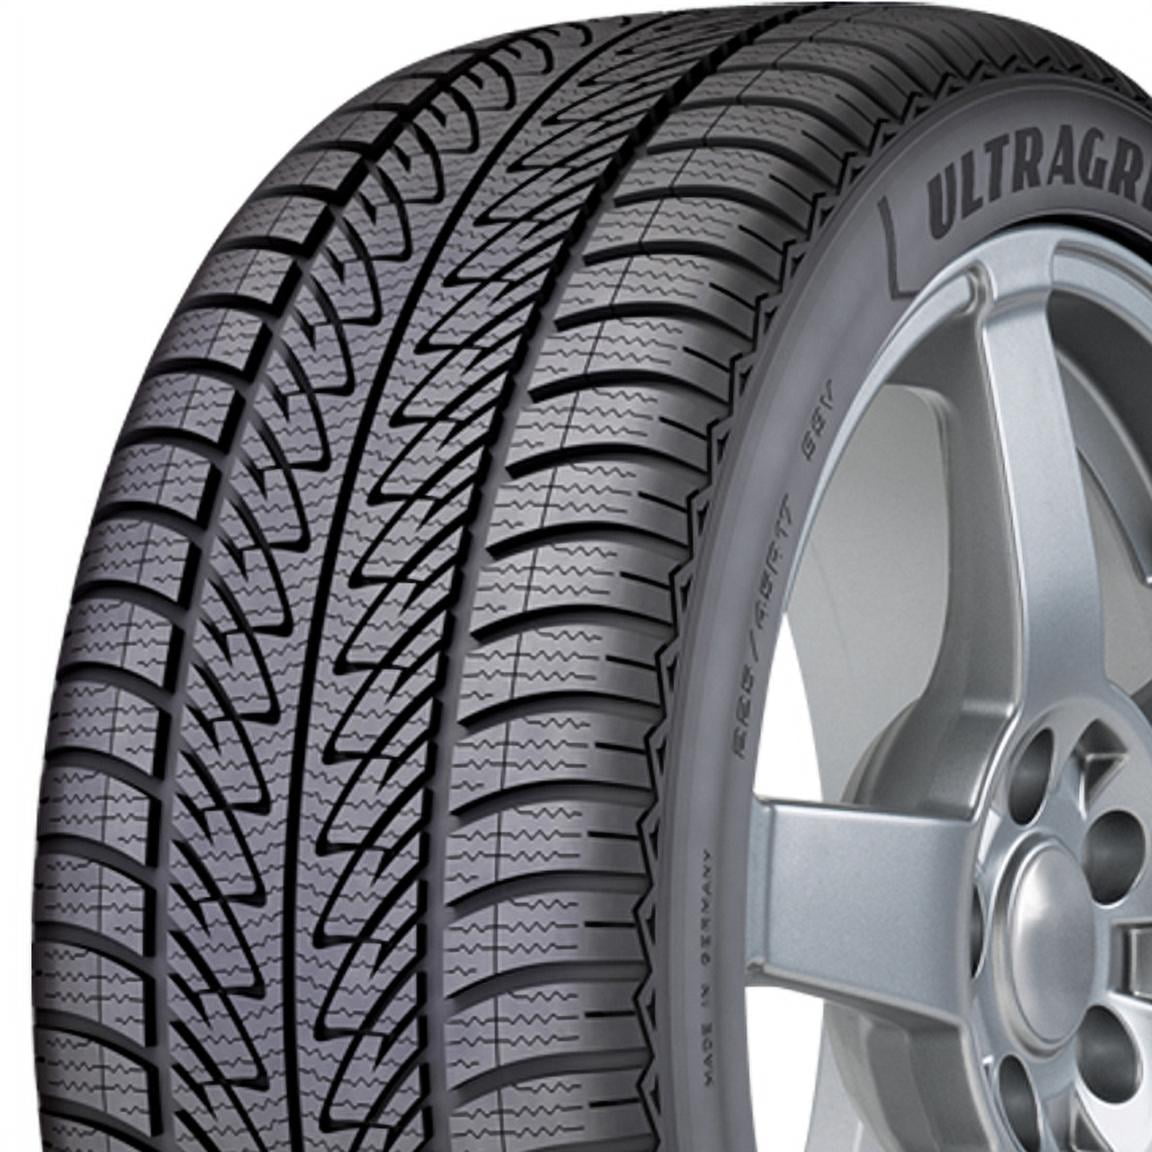 Goodyear ultra tire 8 Versa performance grip 2003-06 bsw SL Fits: 2012 SE-R, 87H 1.8 Nissan winter Nissan Sentra P195/55R16